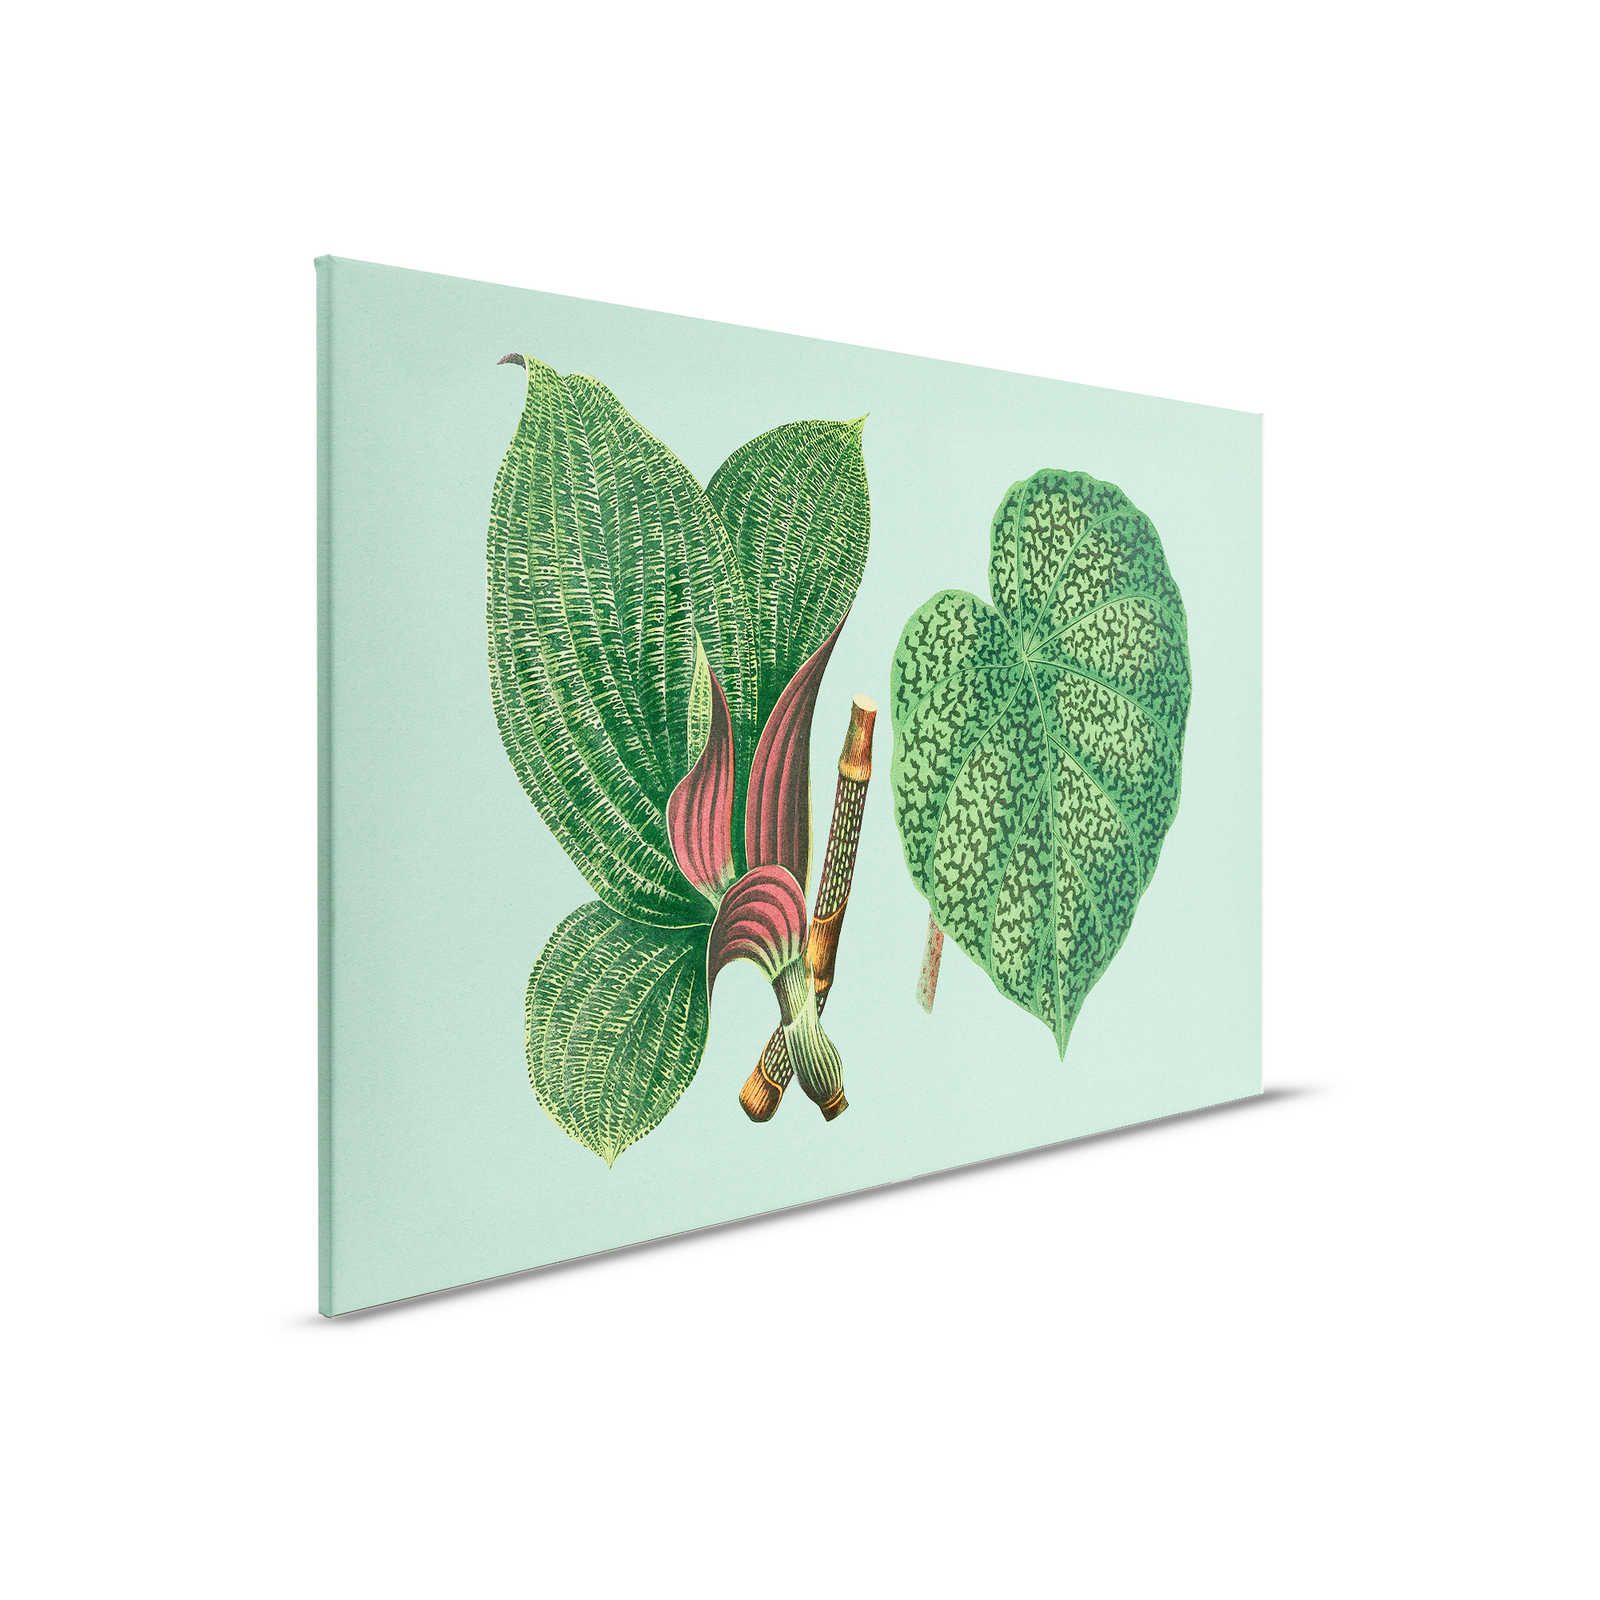 Leaf Garden 2 - Quadro su tela Verde con piante tropicali - 0,90 m x 0,60 m
